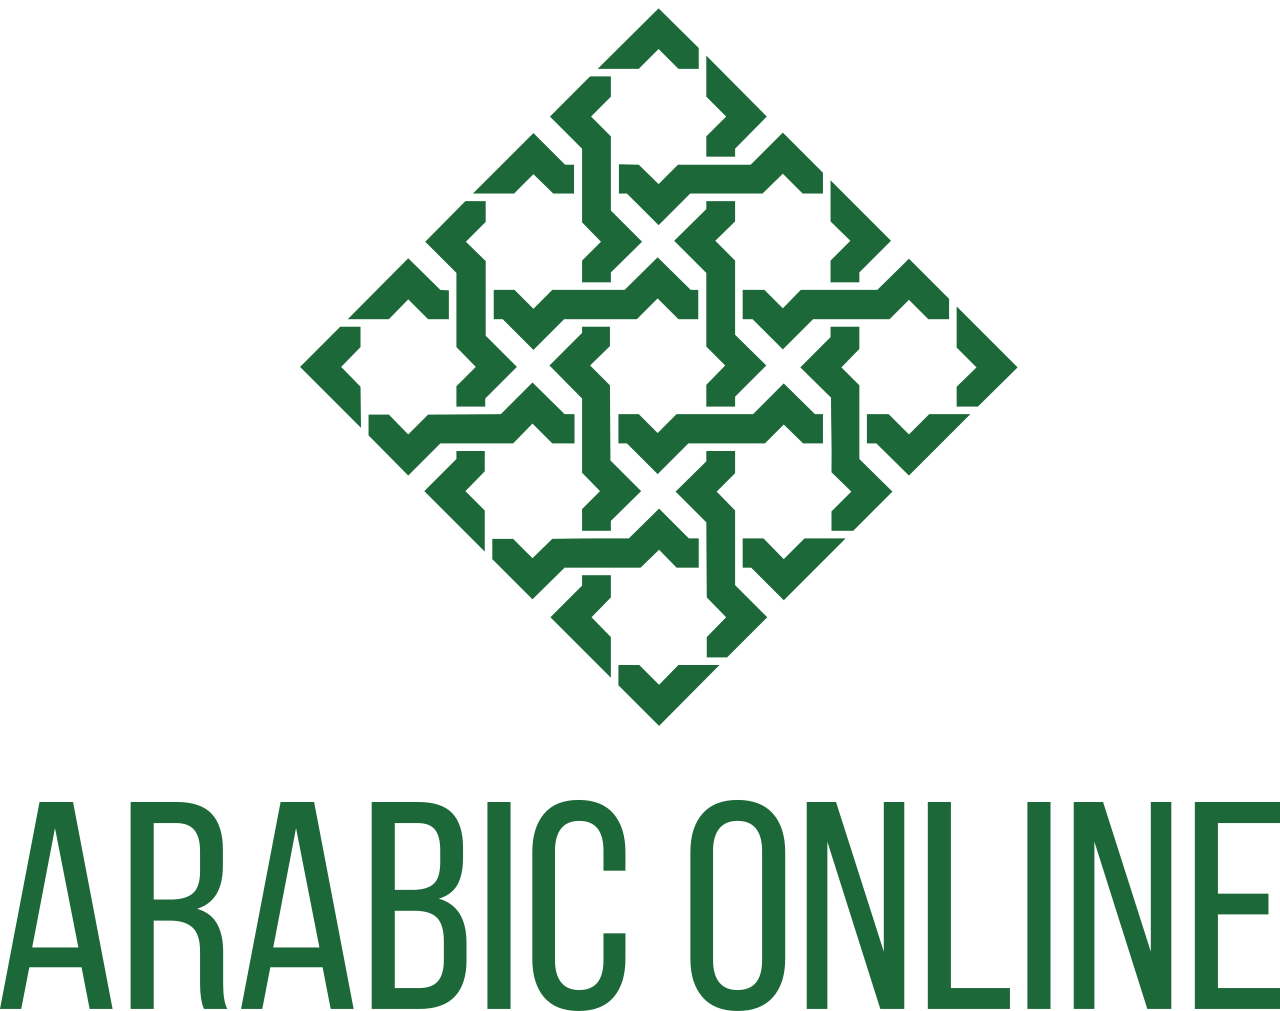 Arabic Online's web page